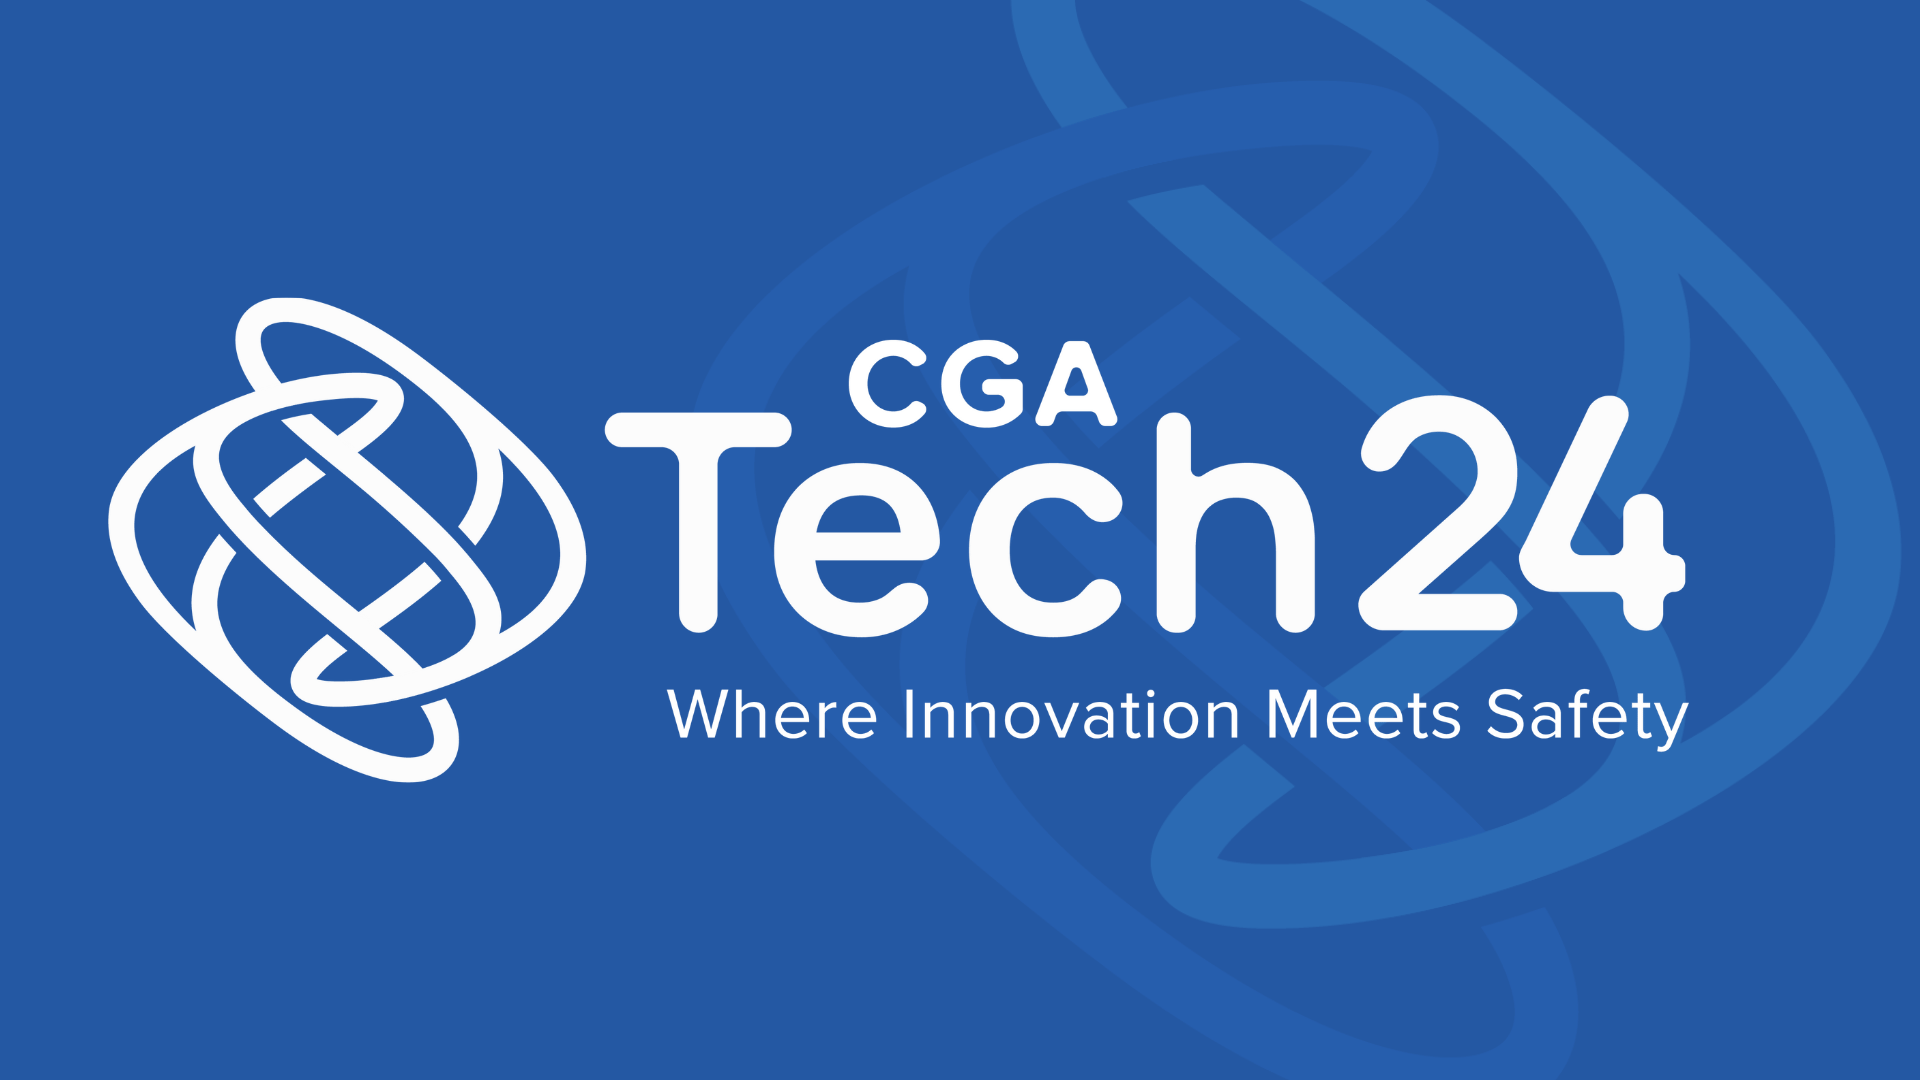 CGA Tech 24 Cover